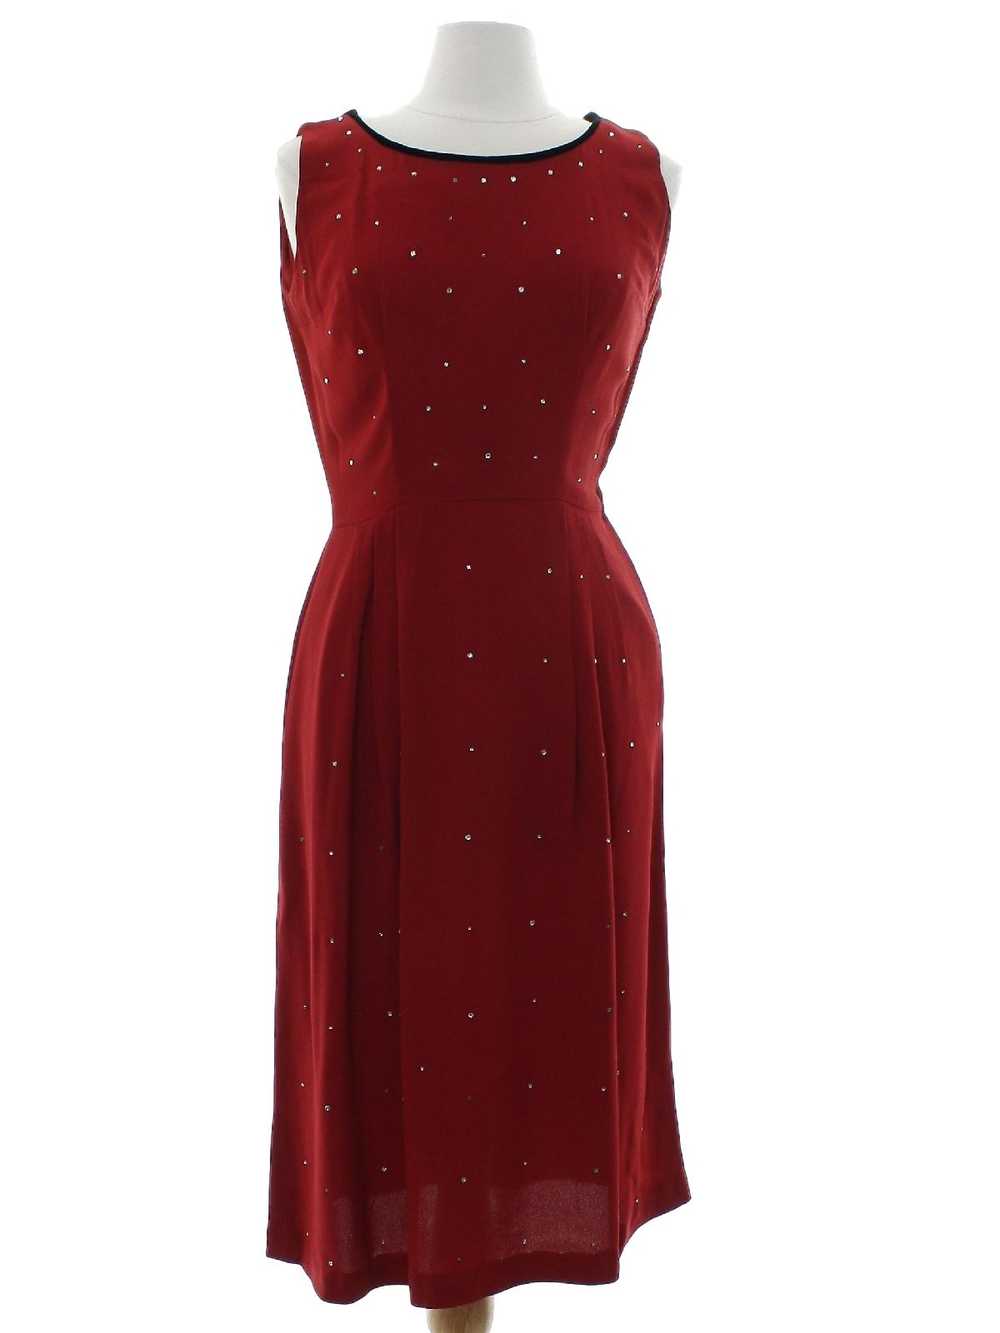 1950's Fab Fifties Cocktail Dress - image 1